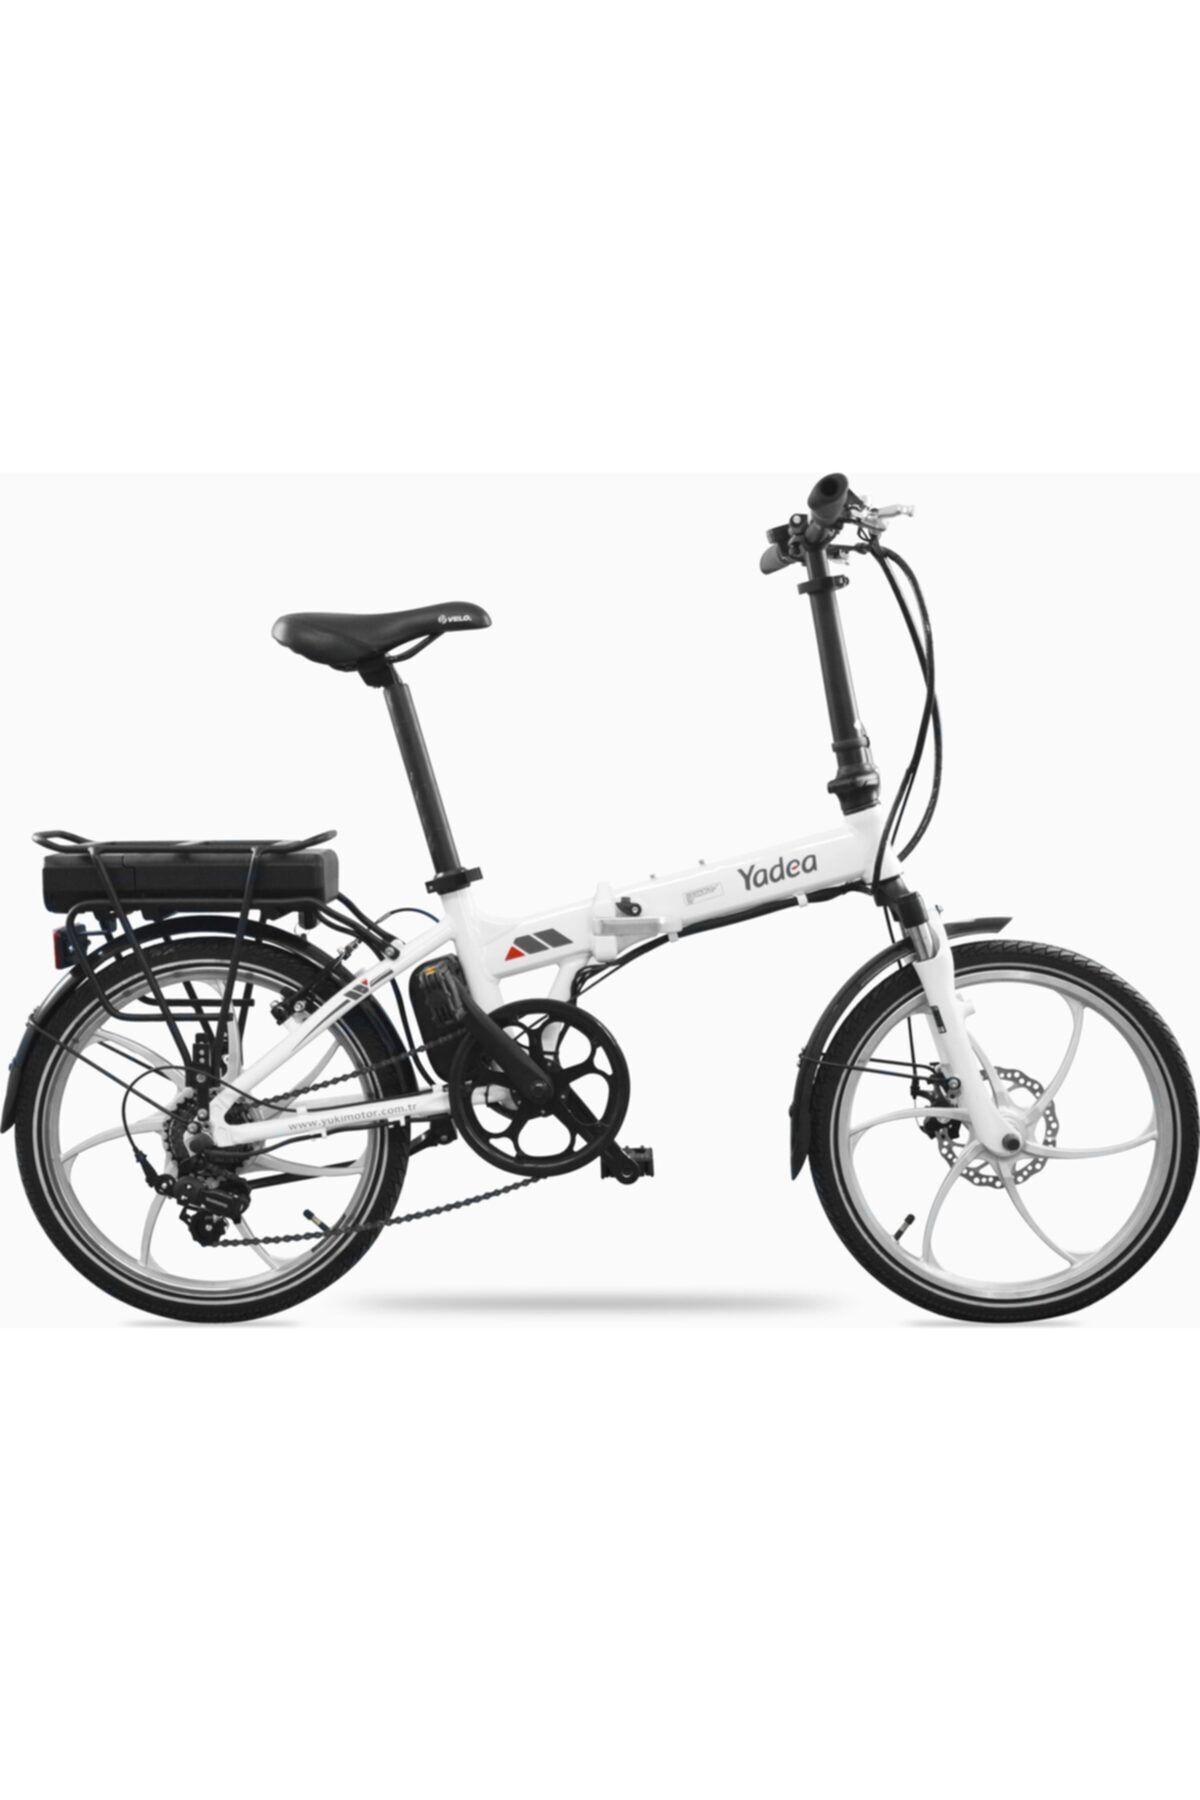 Yuki Yd - Ebx042 Elektrikli Bisiklet